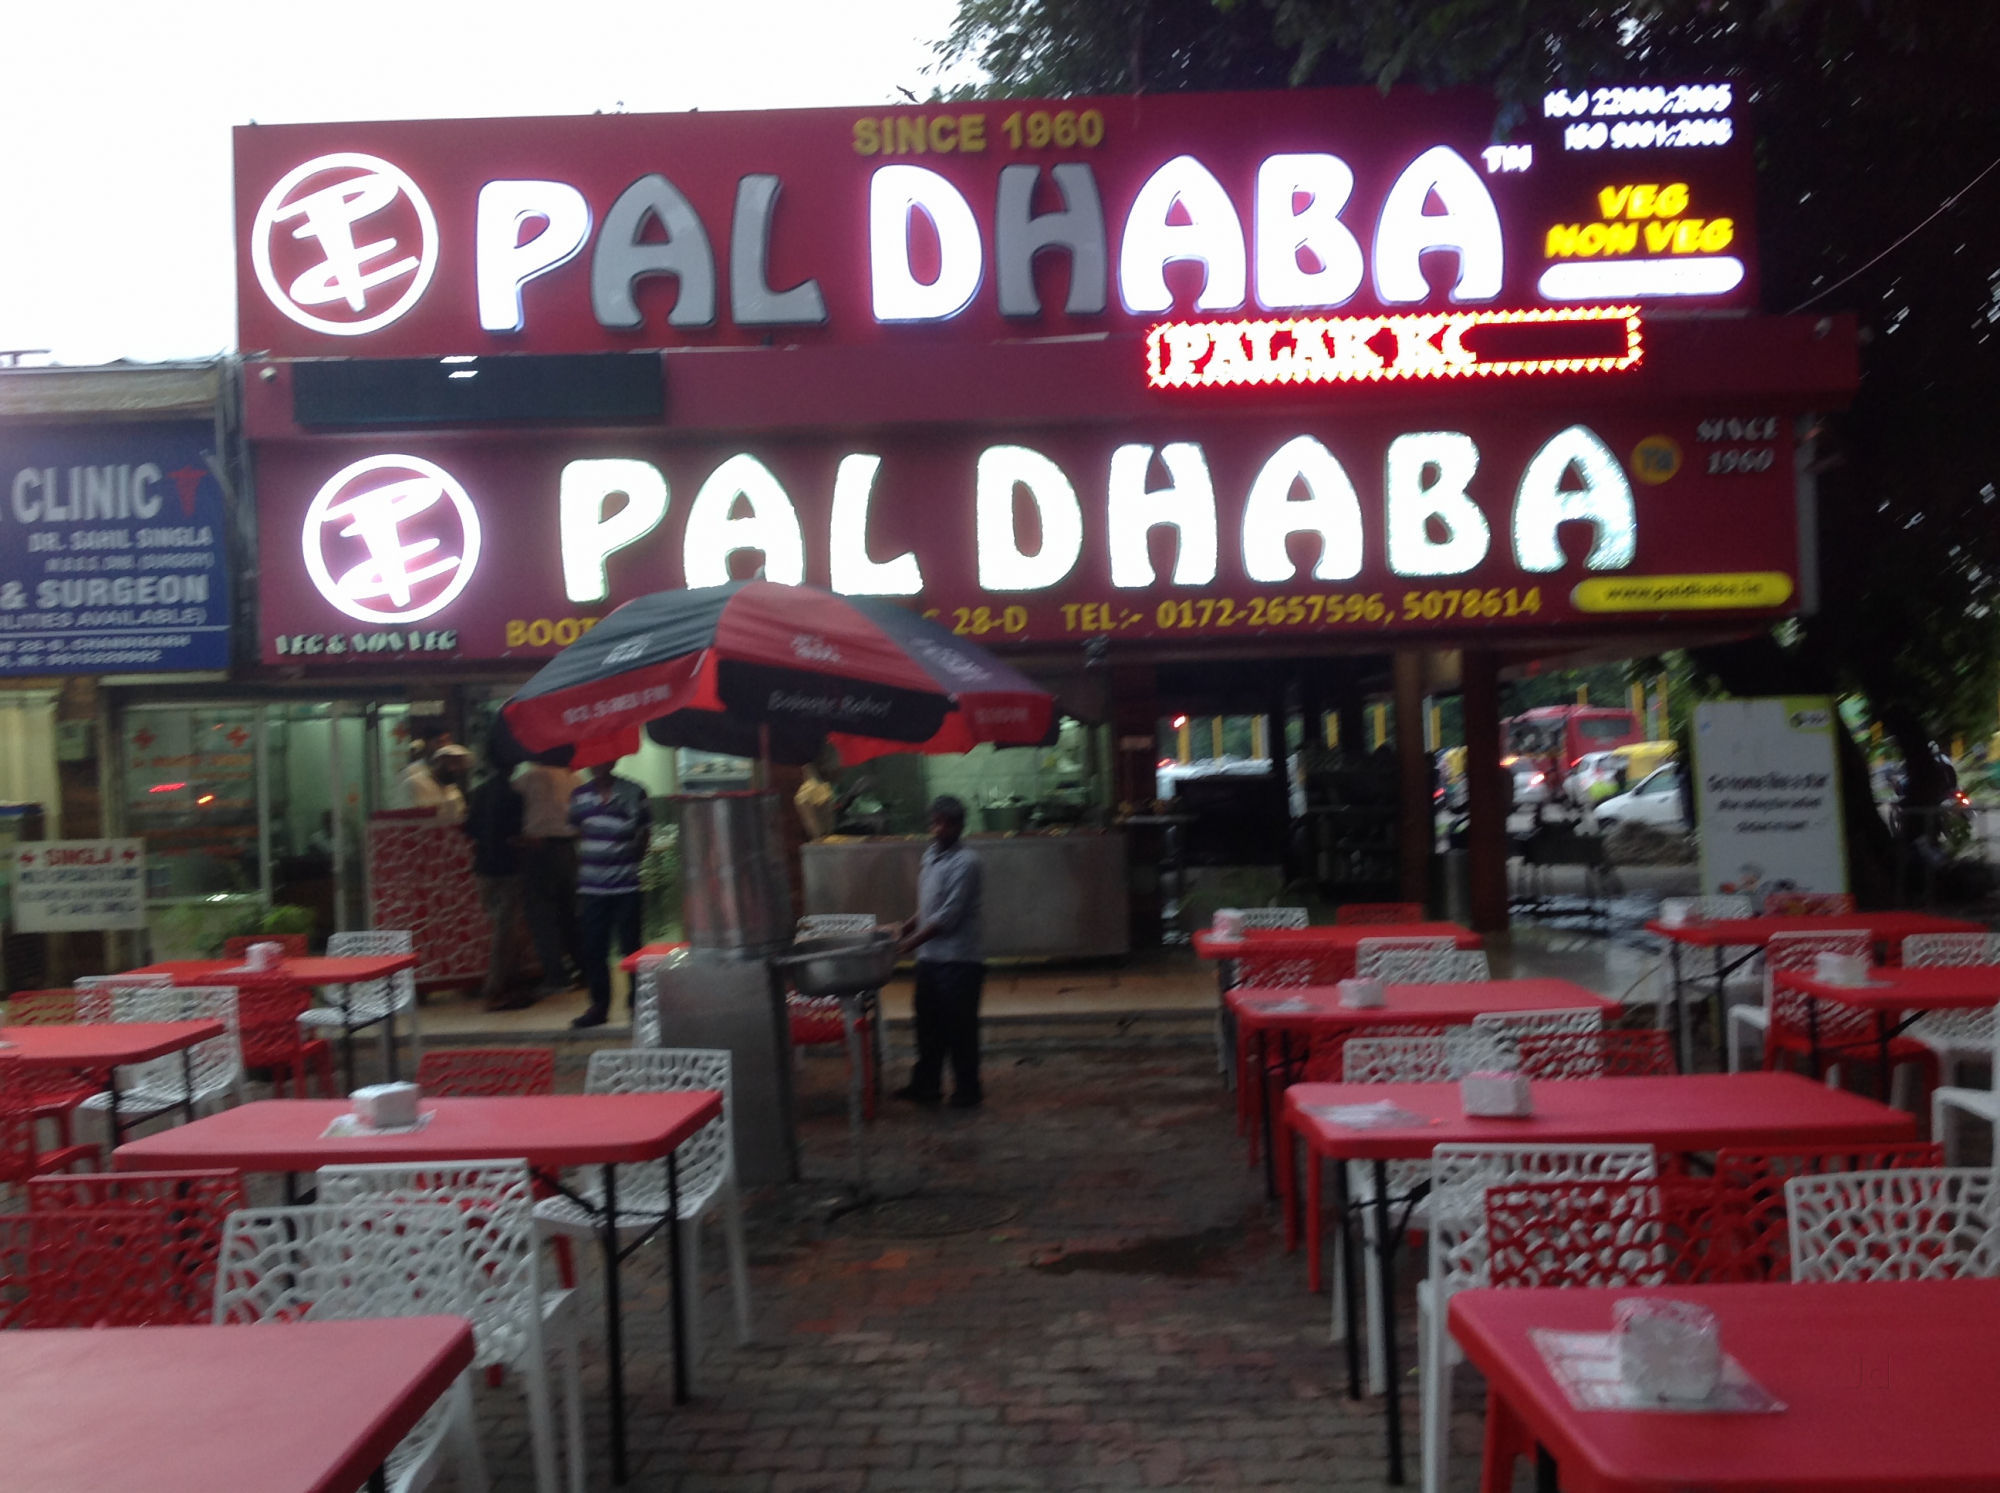 Pal dhaba - the city beautiful Chandigarh